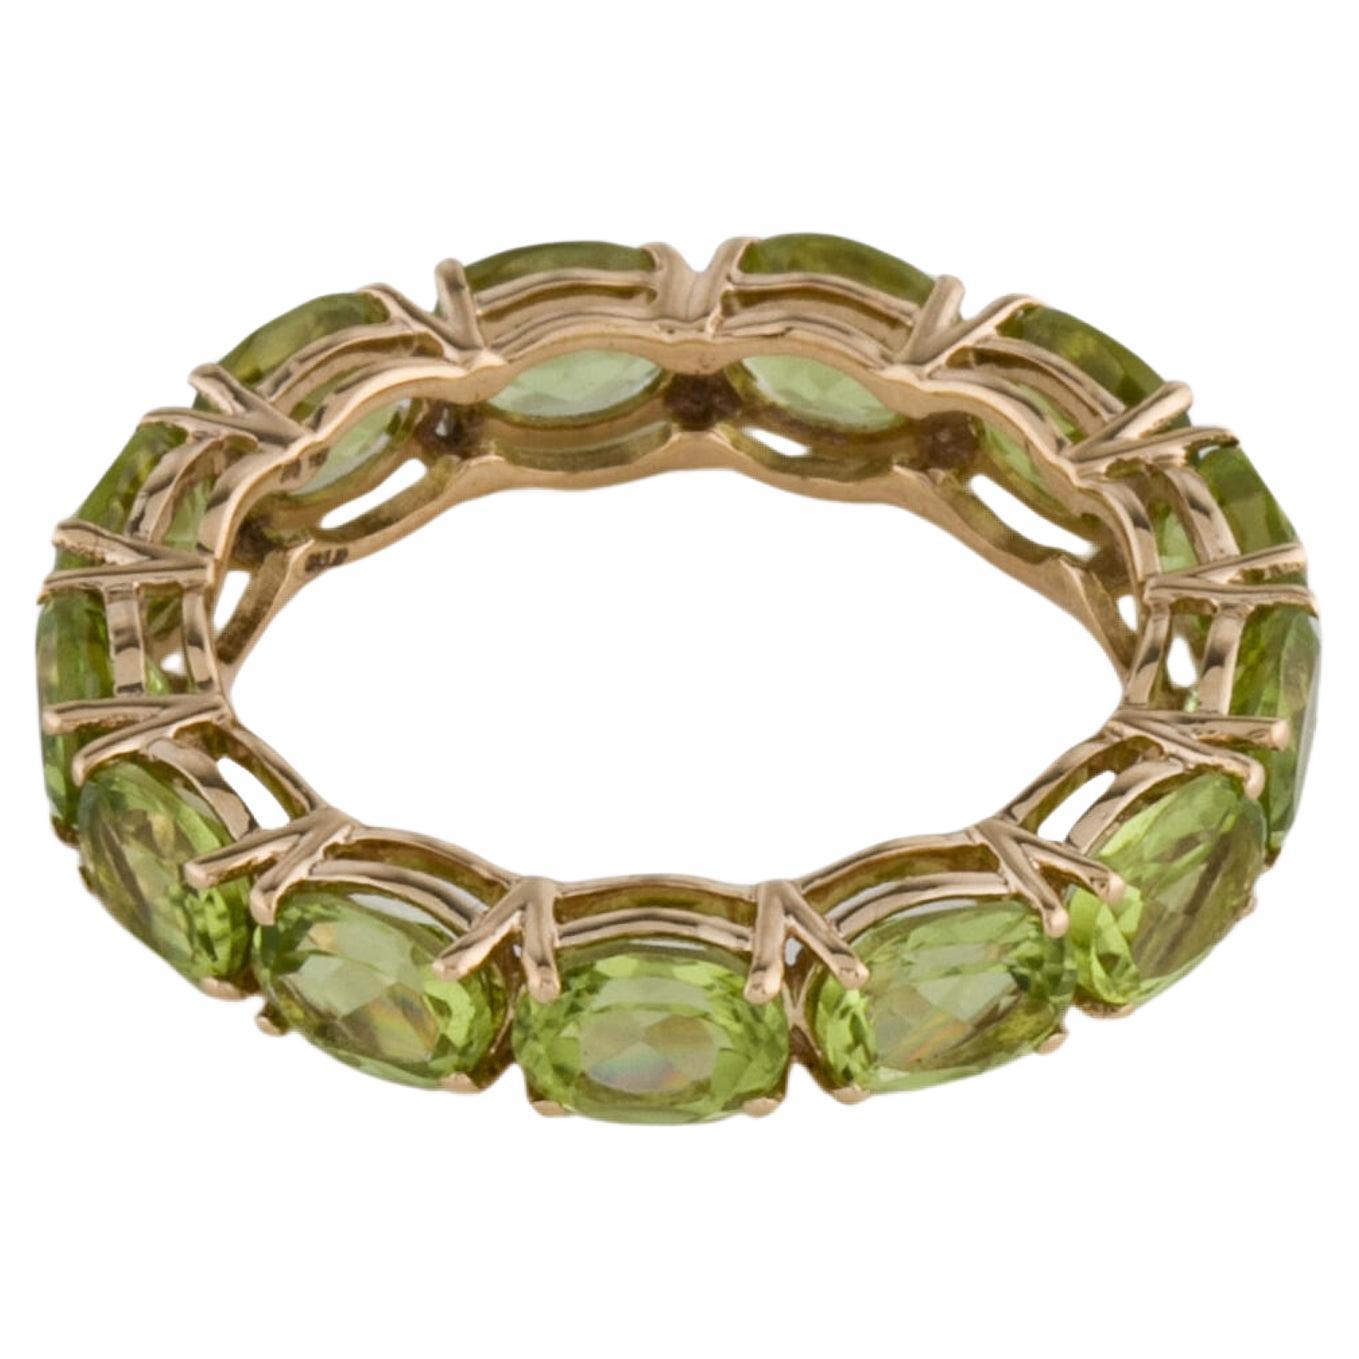 Elegant 14K Peridot Eternity Band Ring - Size 6.75  Luxurious Gemstone Jewelry